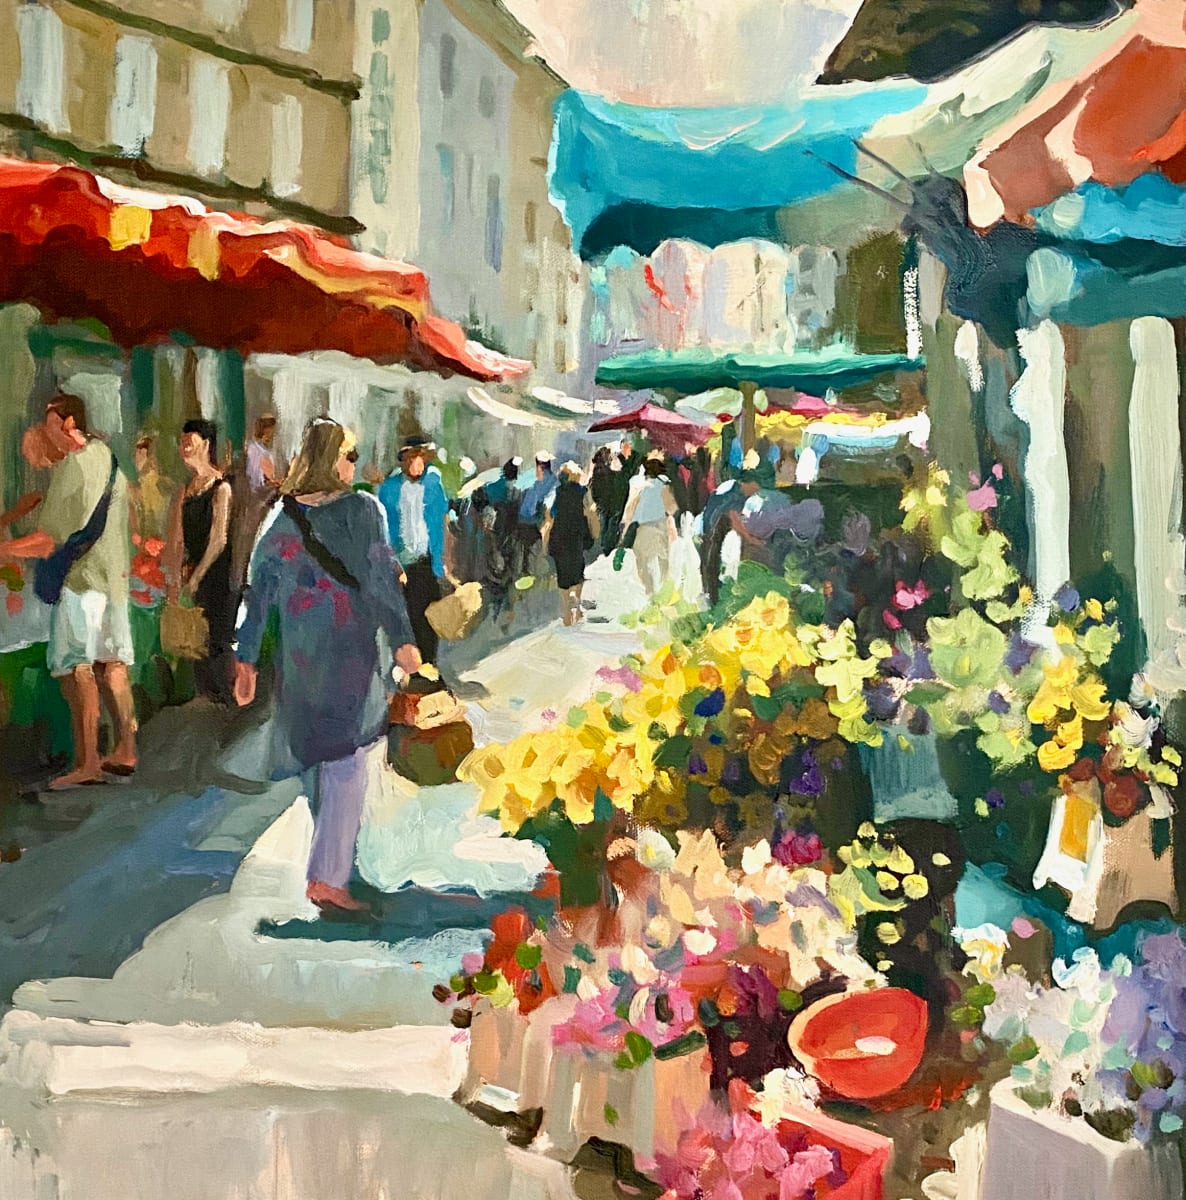 Market Street by Katie Dobson Cundiff  Image: Market Street in France